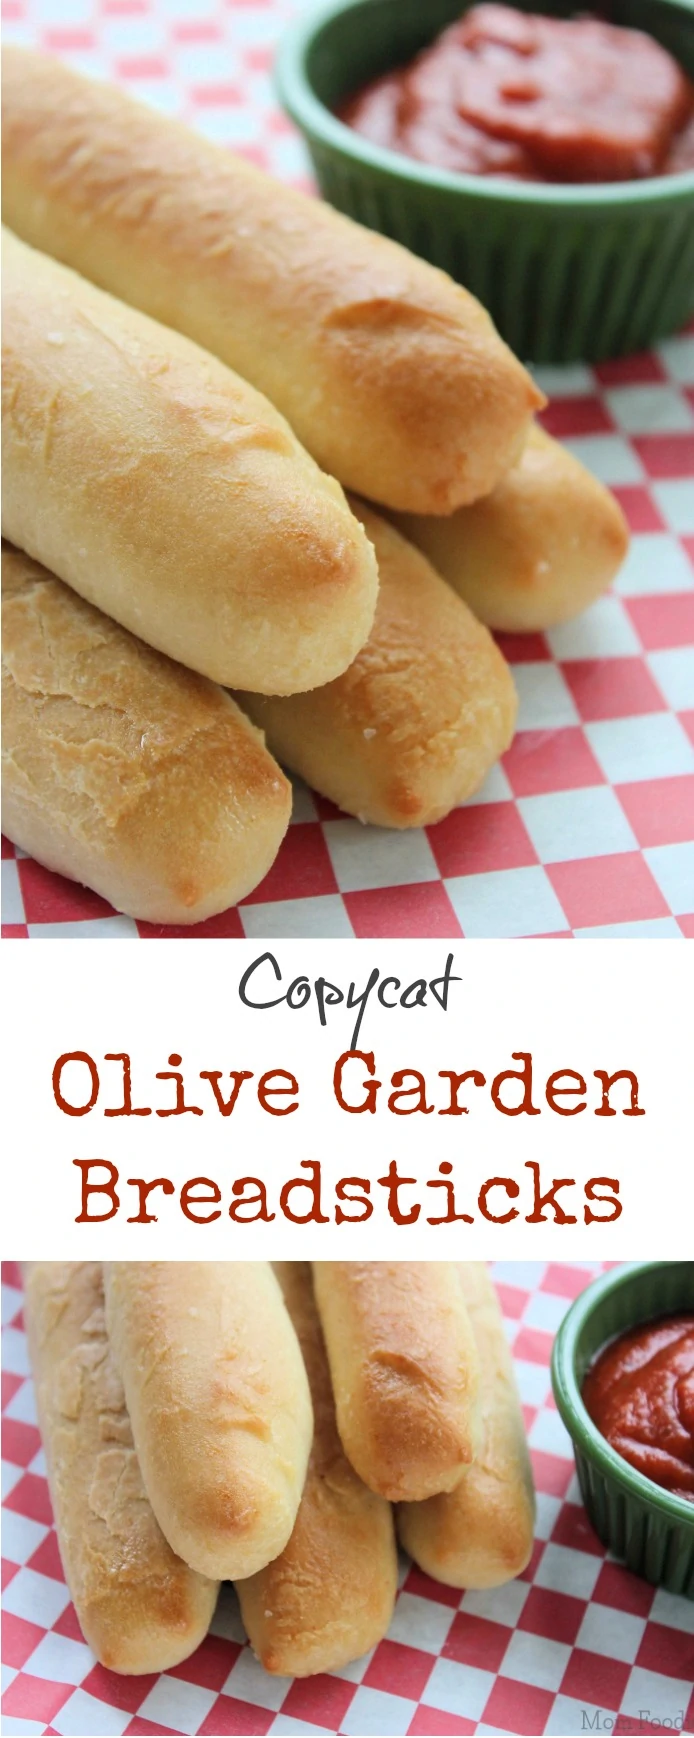 Copycat Olive Garden Breadsticks Homemade recipe